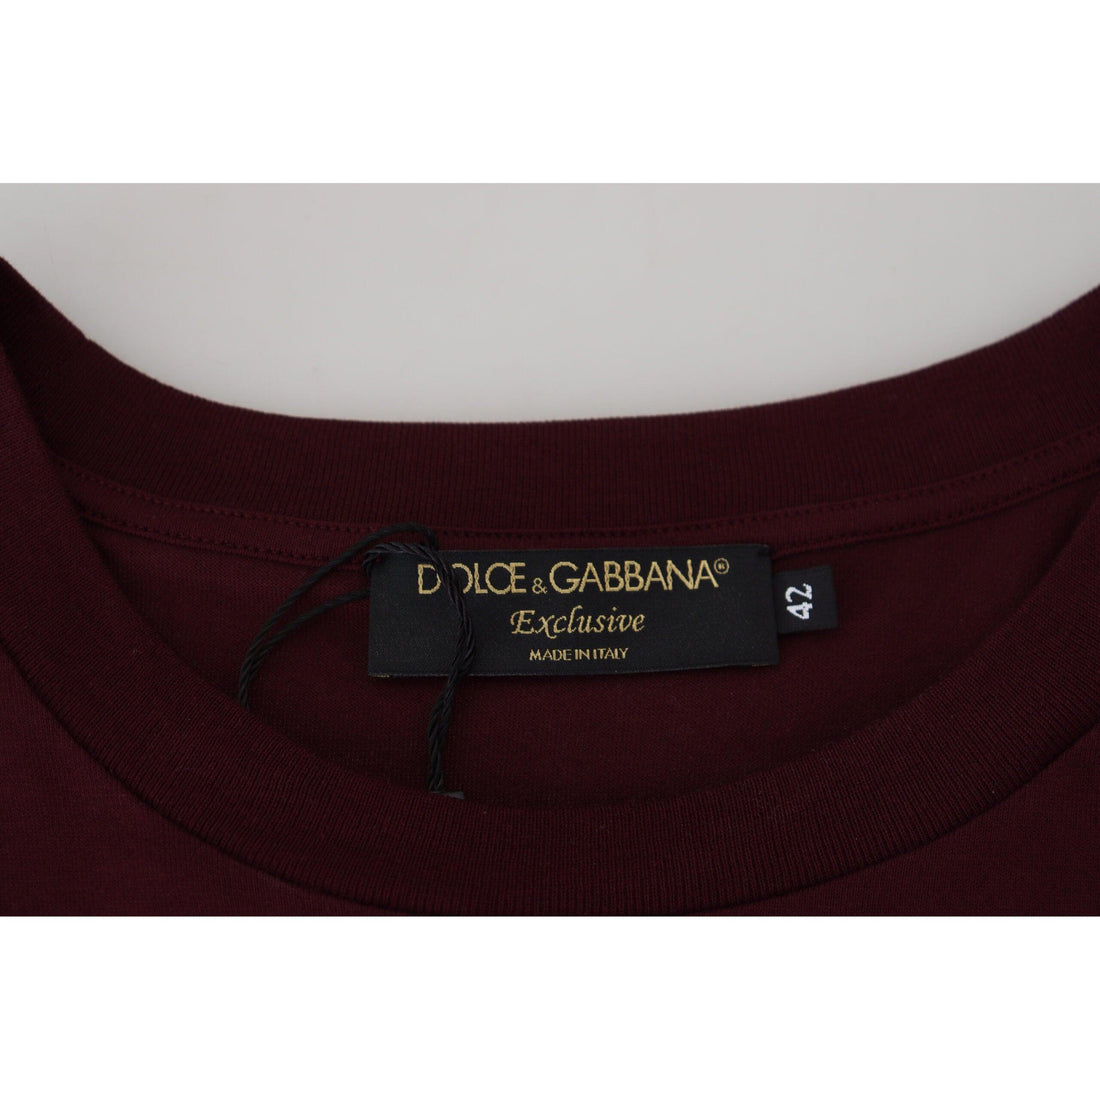 Dolce & Gabbana Maroon Printed Short Sleeves Men T-shirt